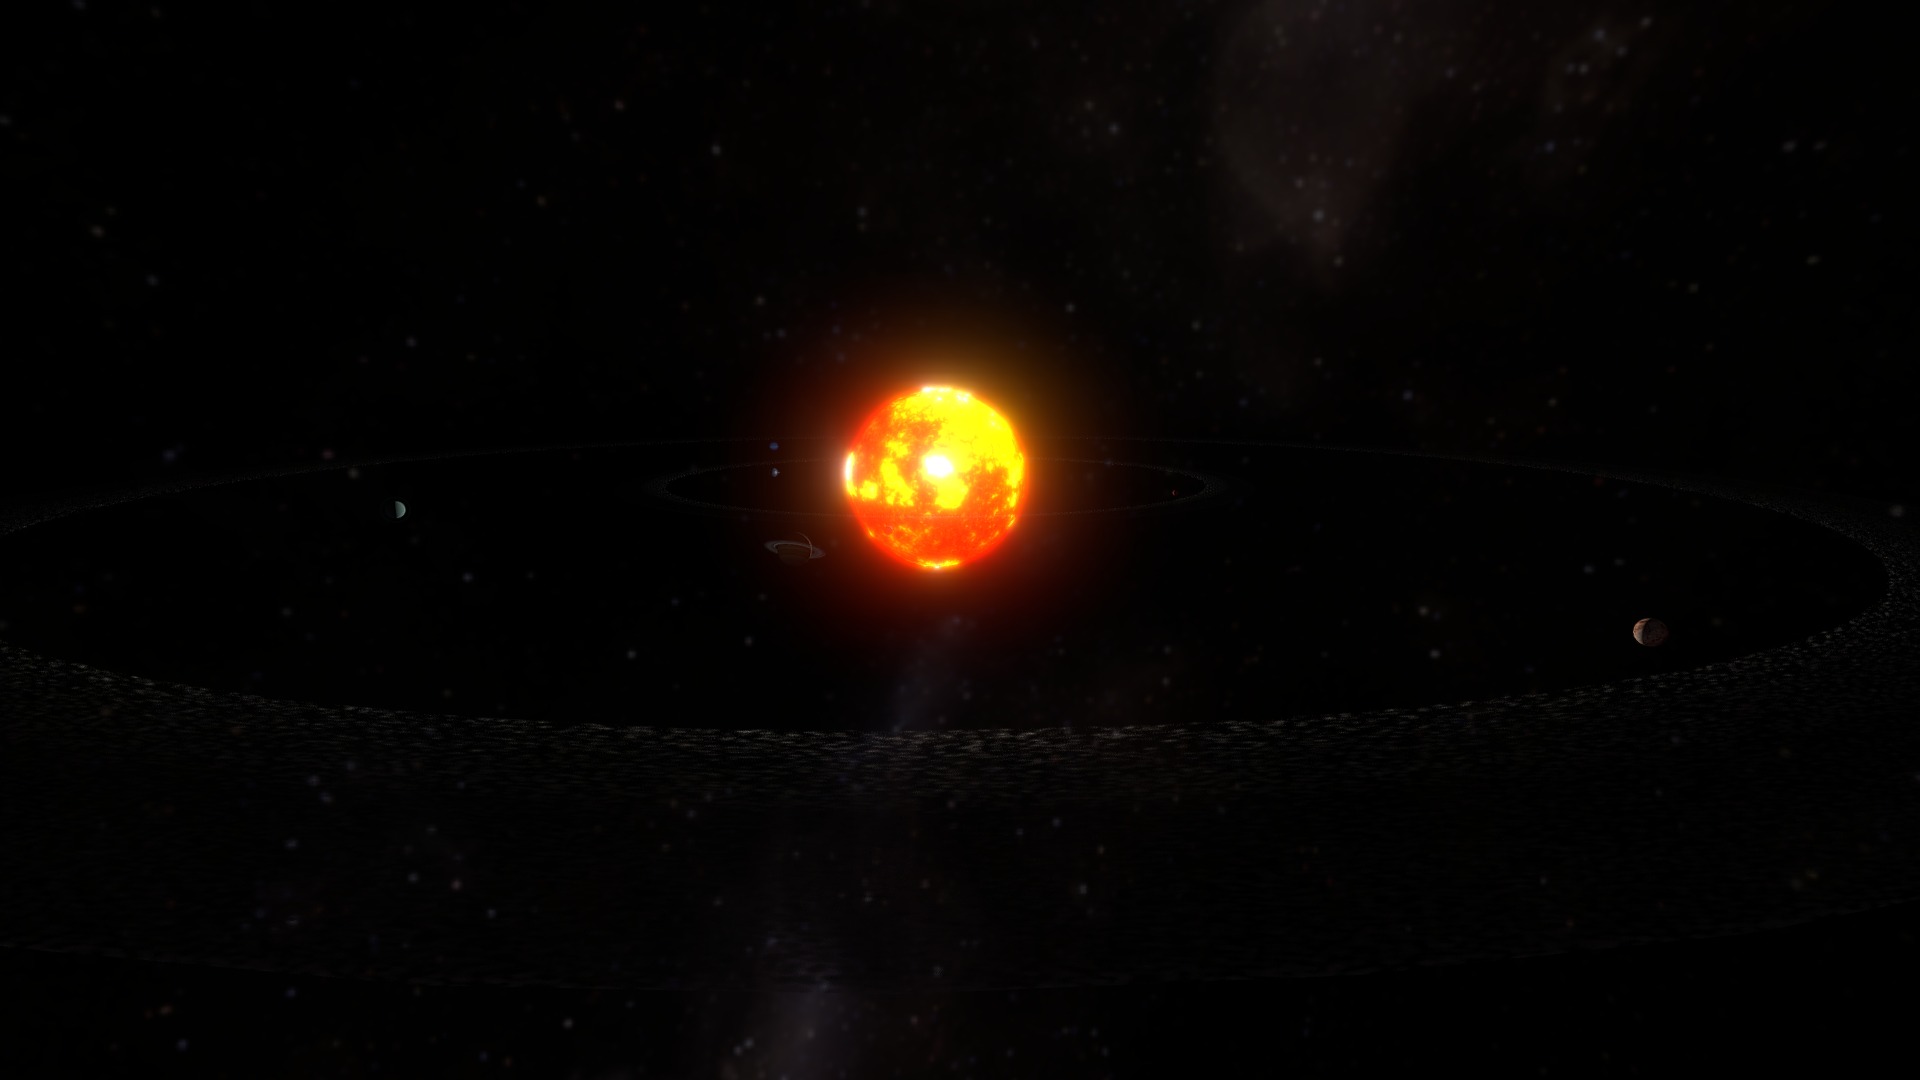 3D model Sistema Solar Animado (Animated Solar System) - This is a 3D model of the Sistema Solar Animado (Animated Solar System). The 3D model is about a red and yellow moon.